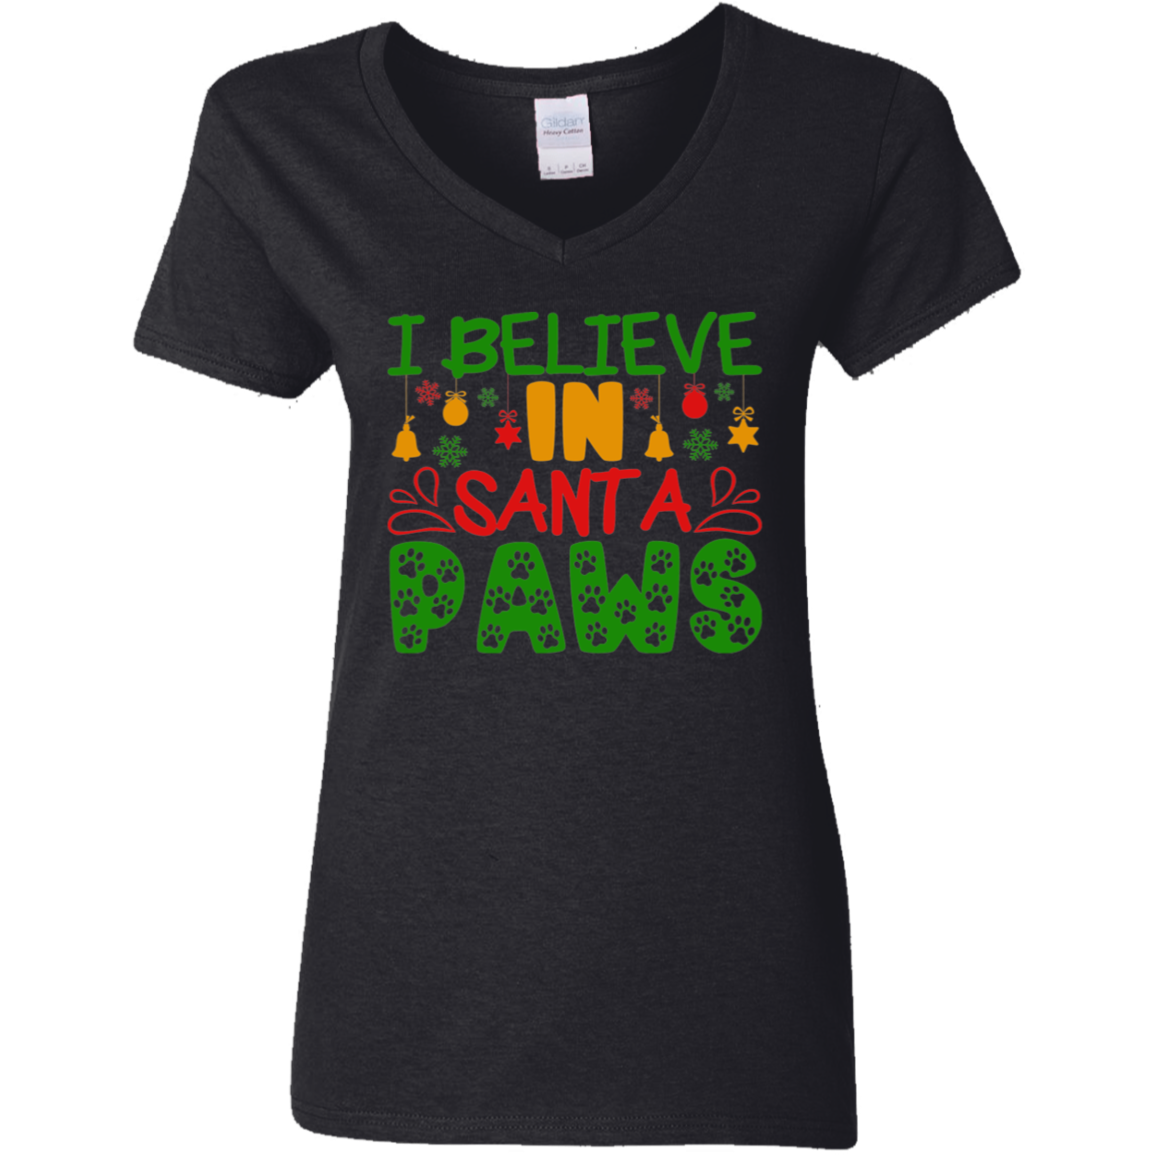 I Believe in Santa Paws Christmas Dog Christmas Ladies' V-Neck T-Shirt